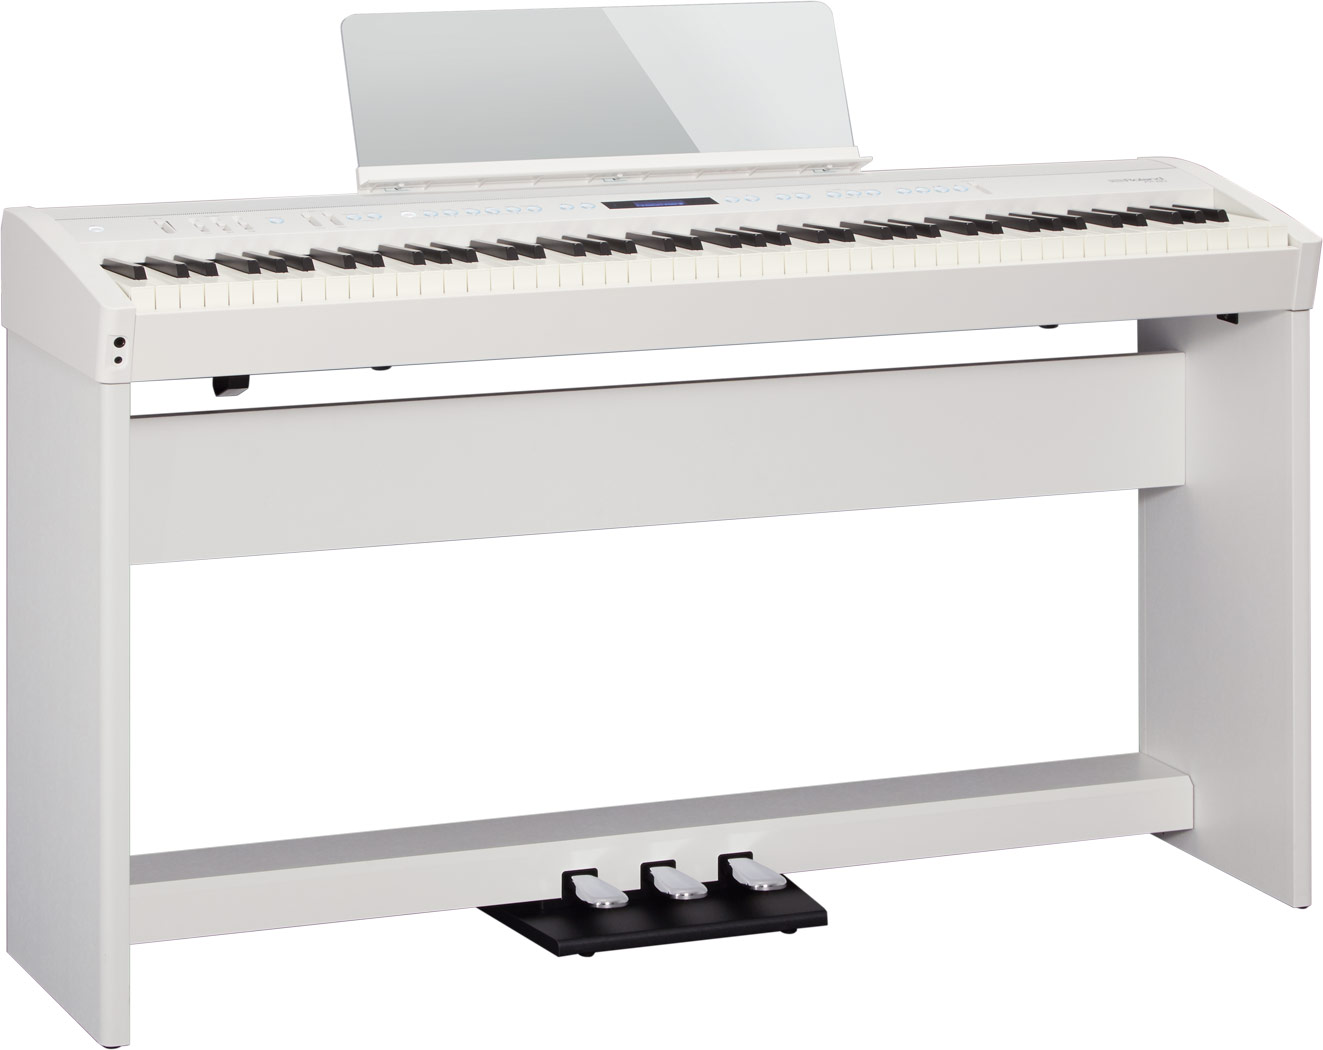 Roland Fp-60 - White - Portable digital piano - Variation 1